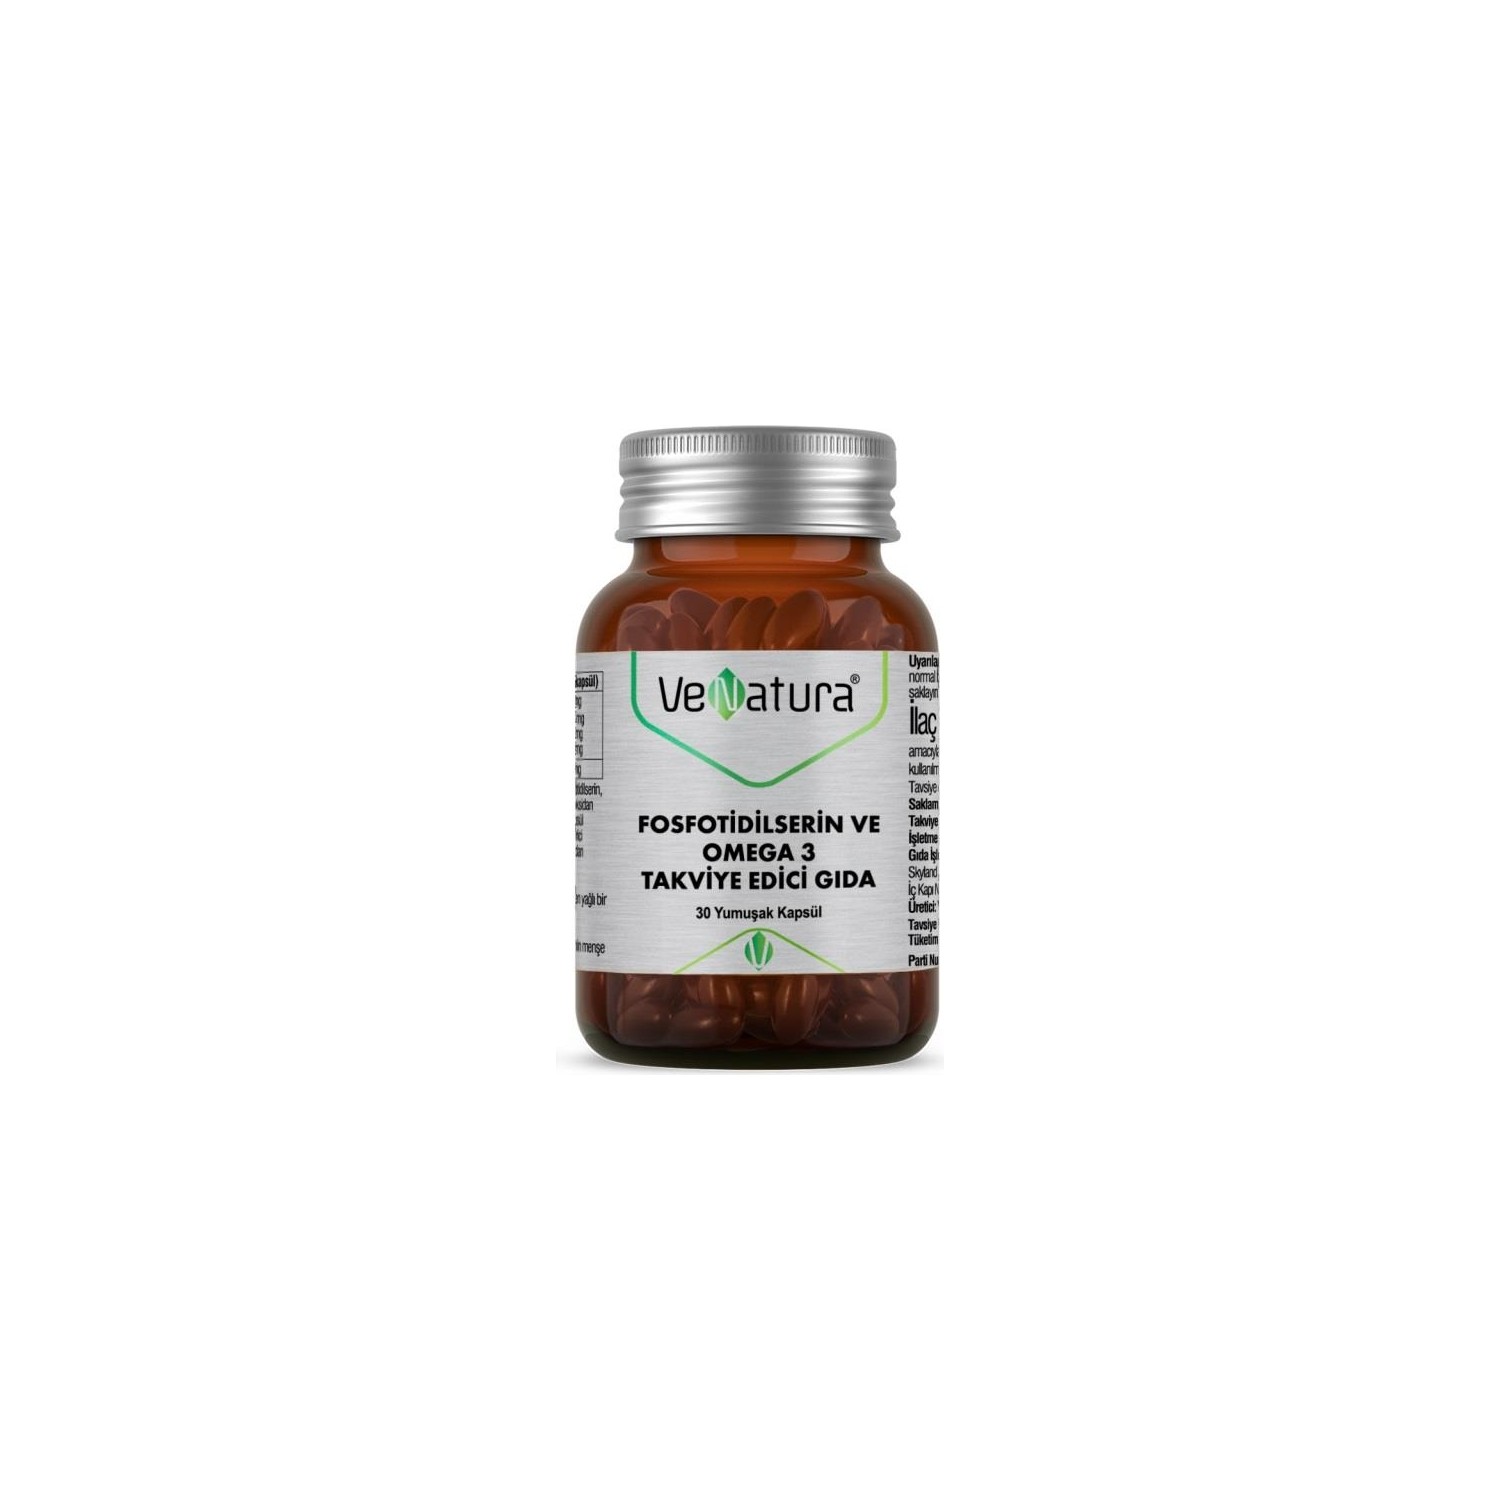 Фосфатидилсерин и Омега-3 Venatura, 30 капсул биодобавка натуральный соевый лецитин licithin 100 капсул